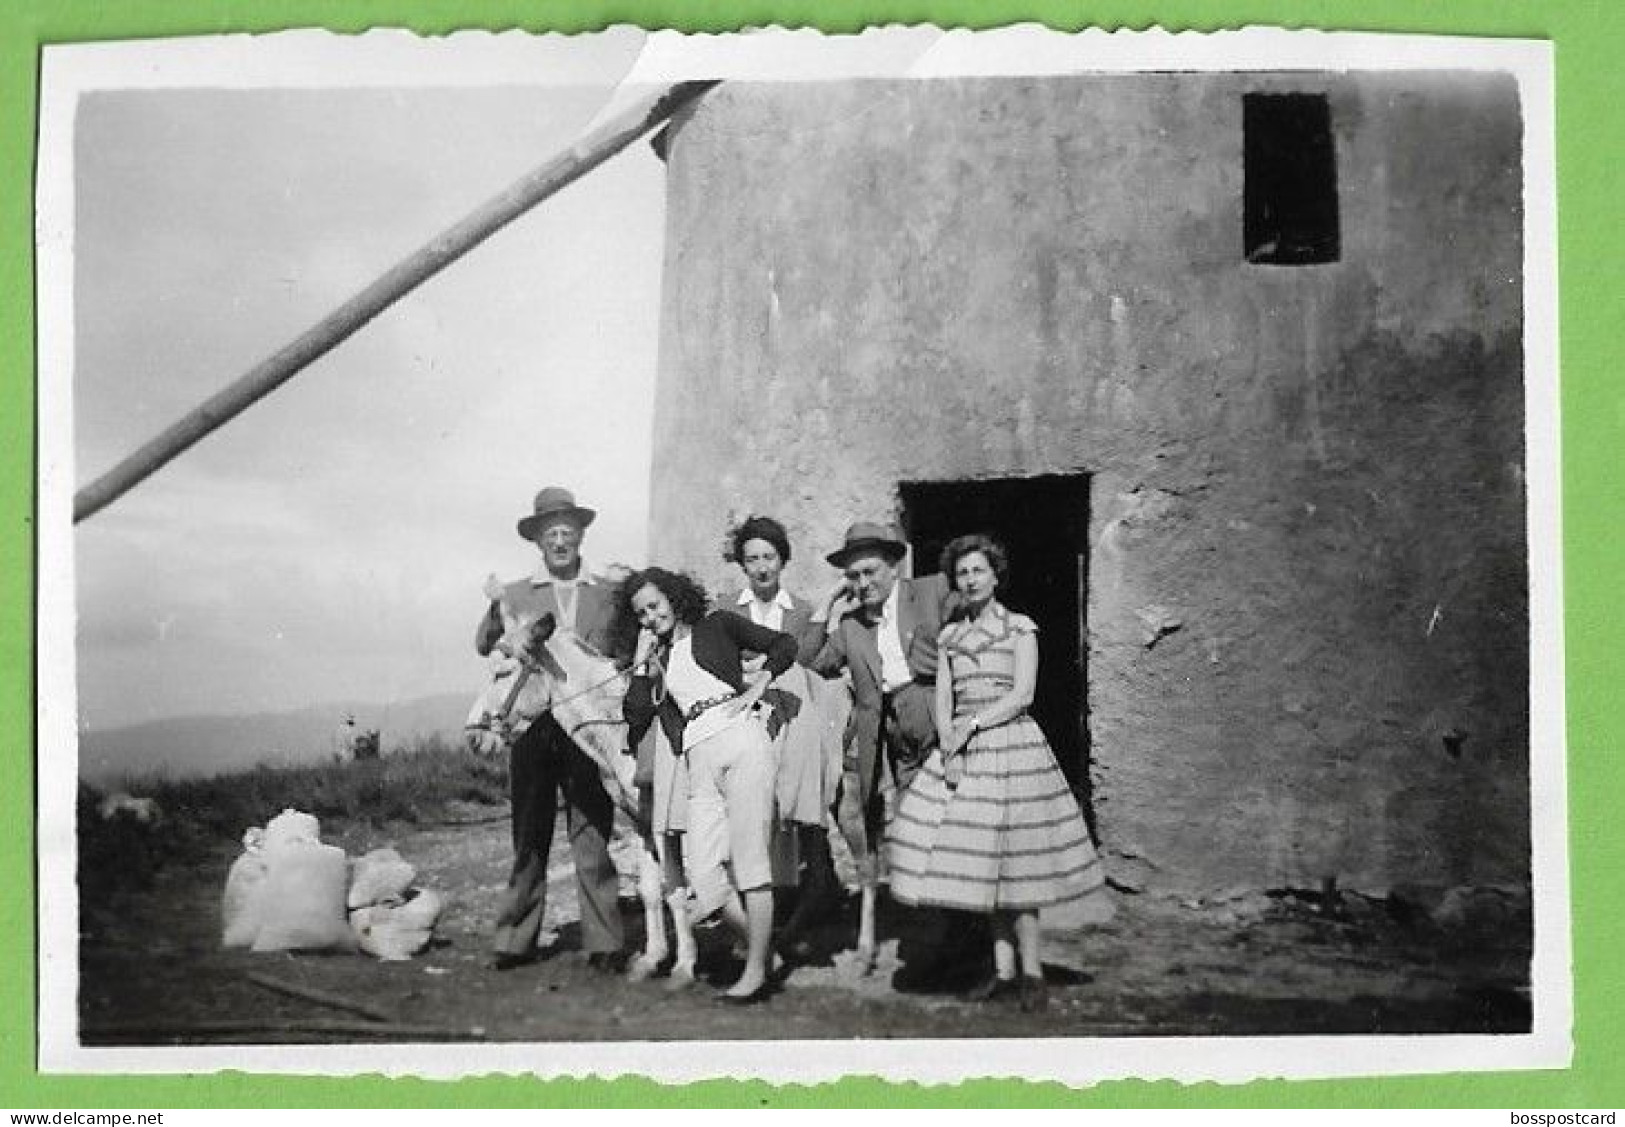 Luso - Buçaco - REAL PHOTO - Moinho De Vento, 1957 - Molen - Windmill - Moulin - Portugal - Moulins à Vent